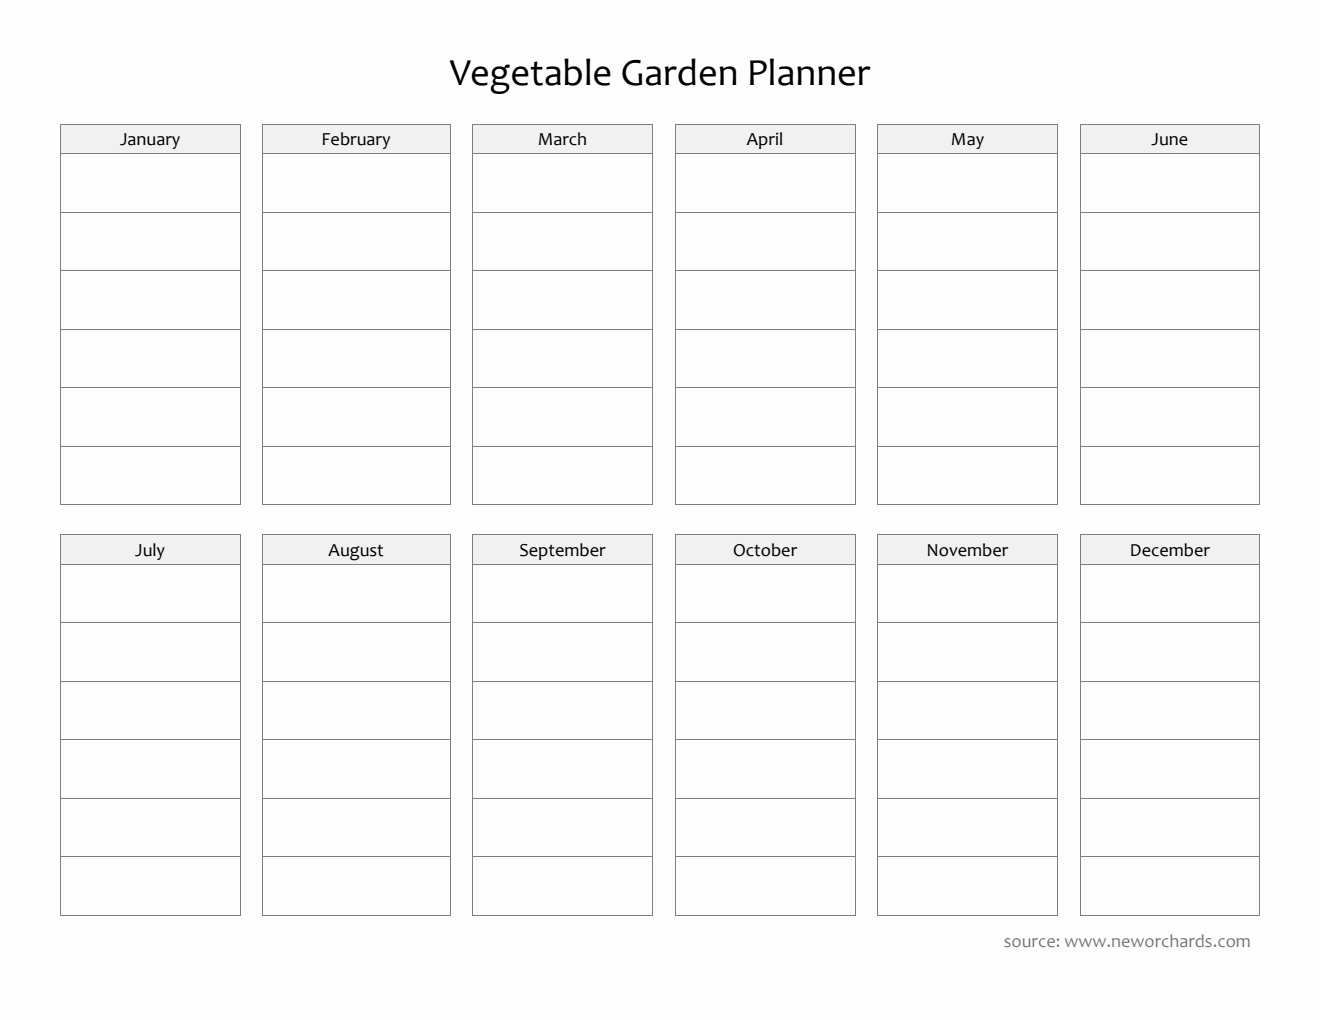 Blank Vegetable Garden Planner in PDF